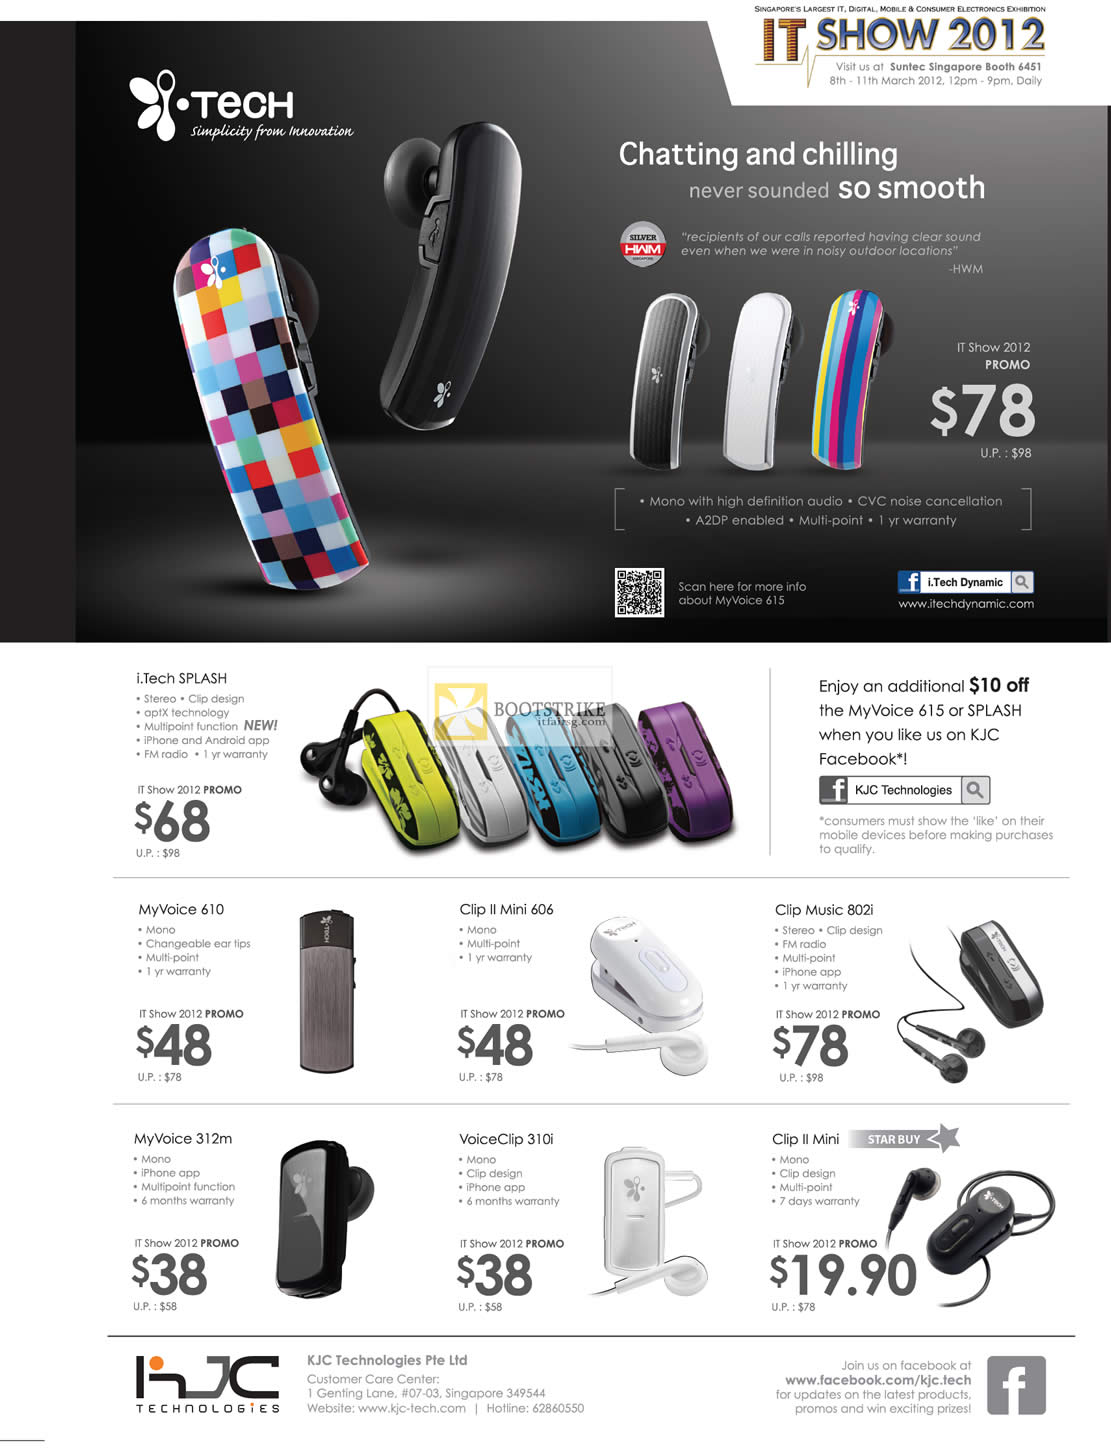 IT SHOW 2012 price list image brochure of KJC ITech Bluetooth Headsets, Splash, MyVoice 610, 312m, Clip II Mini 606, Music 802i, VoiceClip 310i